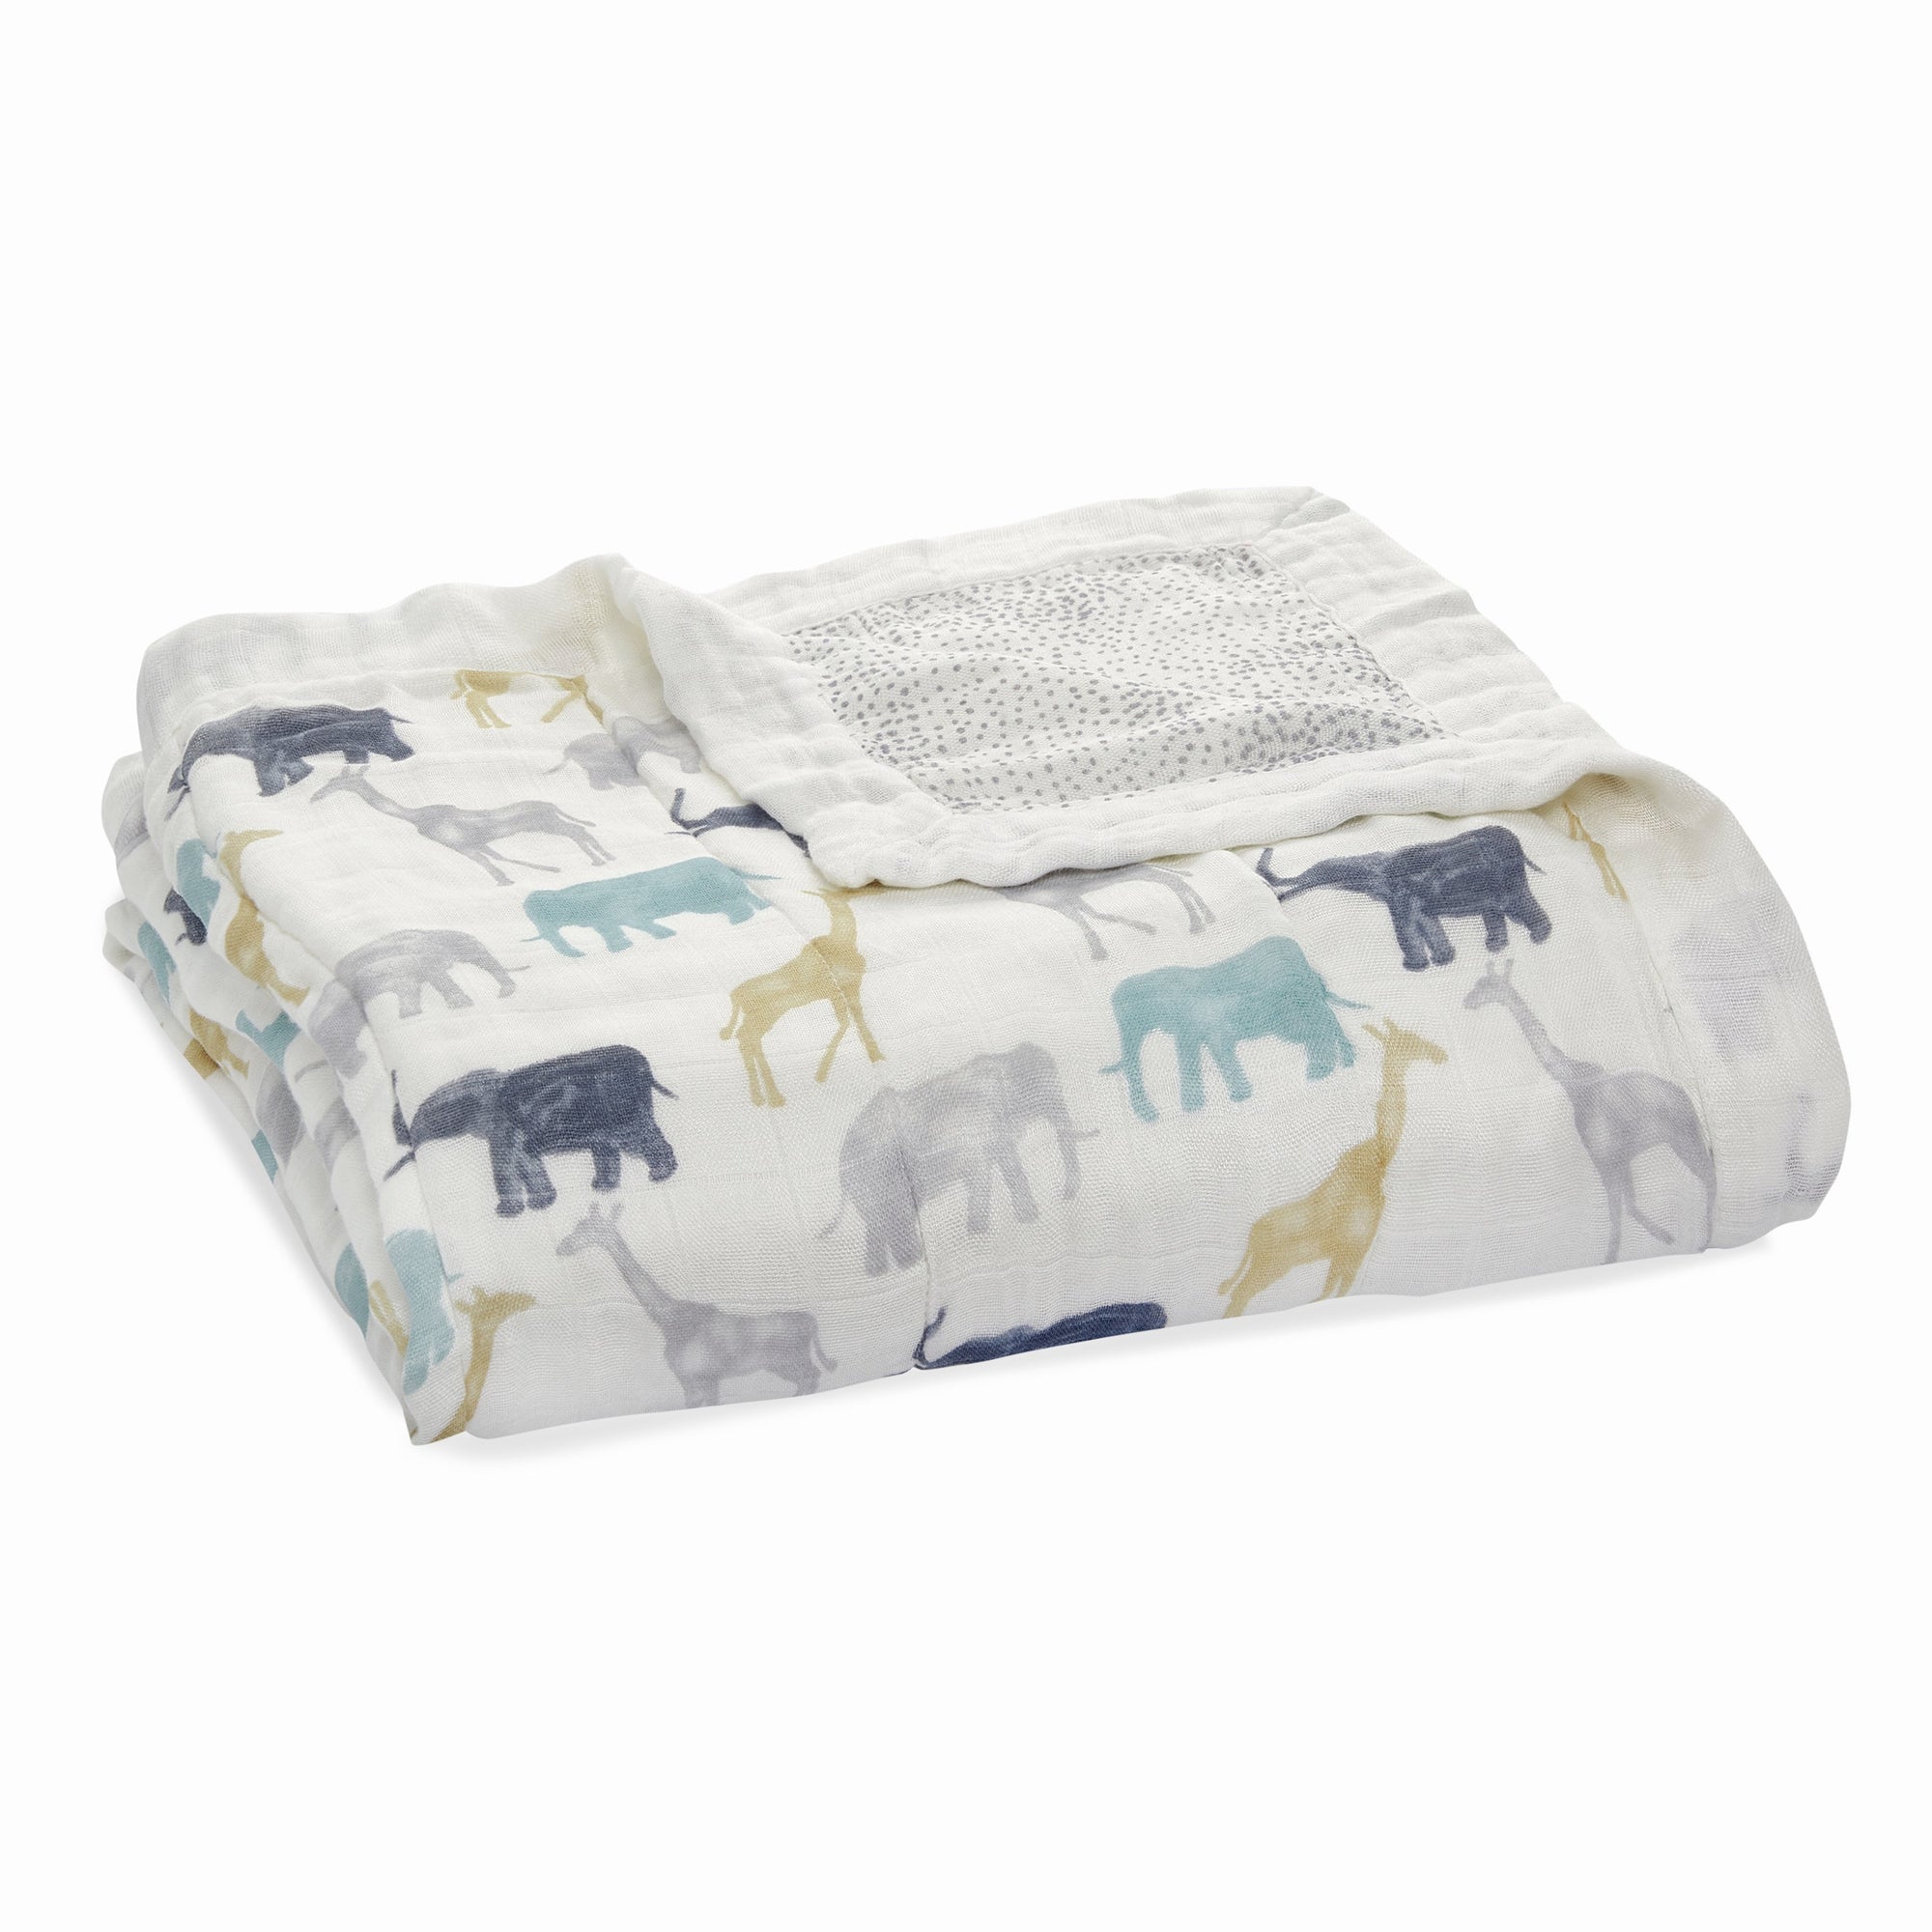 Expedition-Elephants+Giraffes Silky Soft Dream Blanket